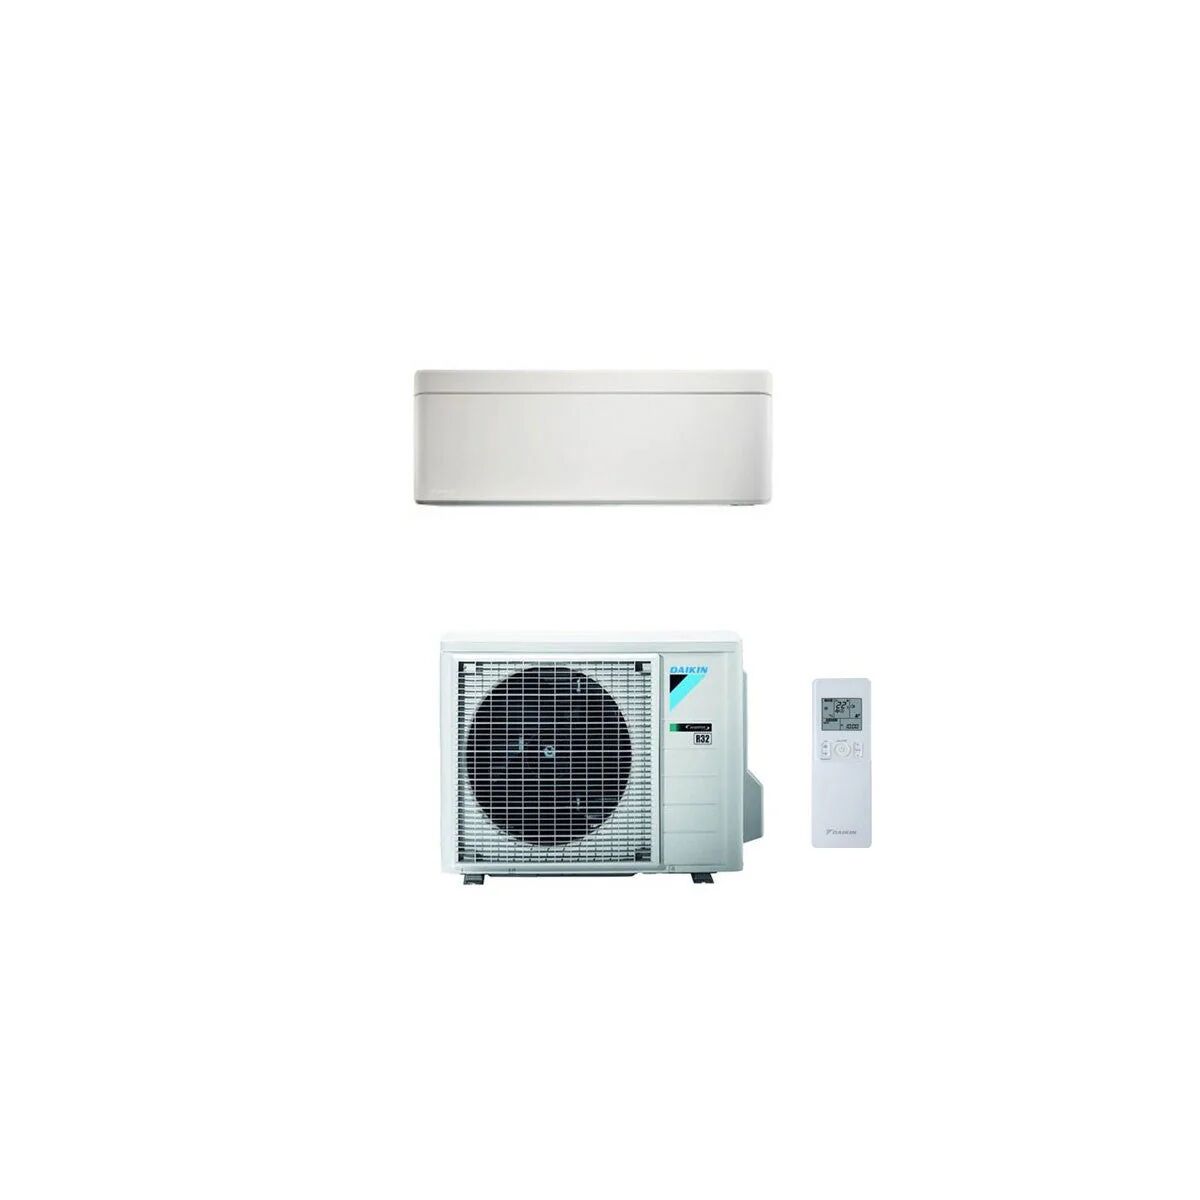 Samsung Condizionatore Daikin Stylish Bianco 15000 Btu Inverter R32 A++/A++ Wifi